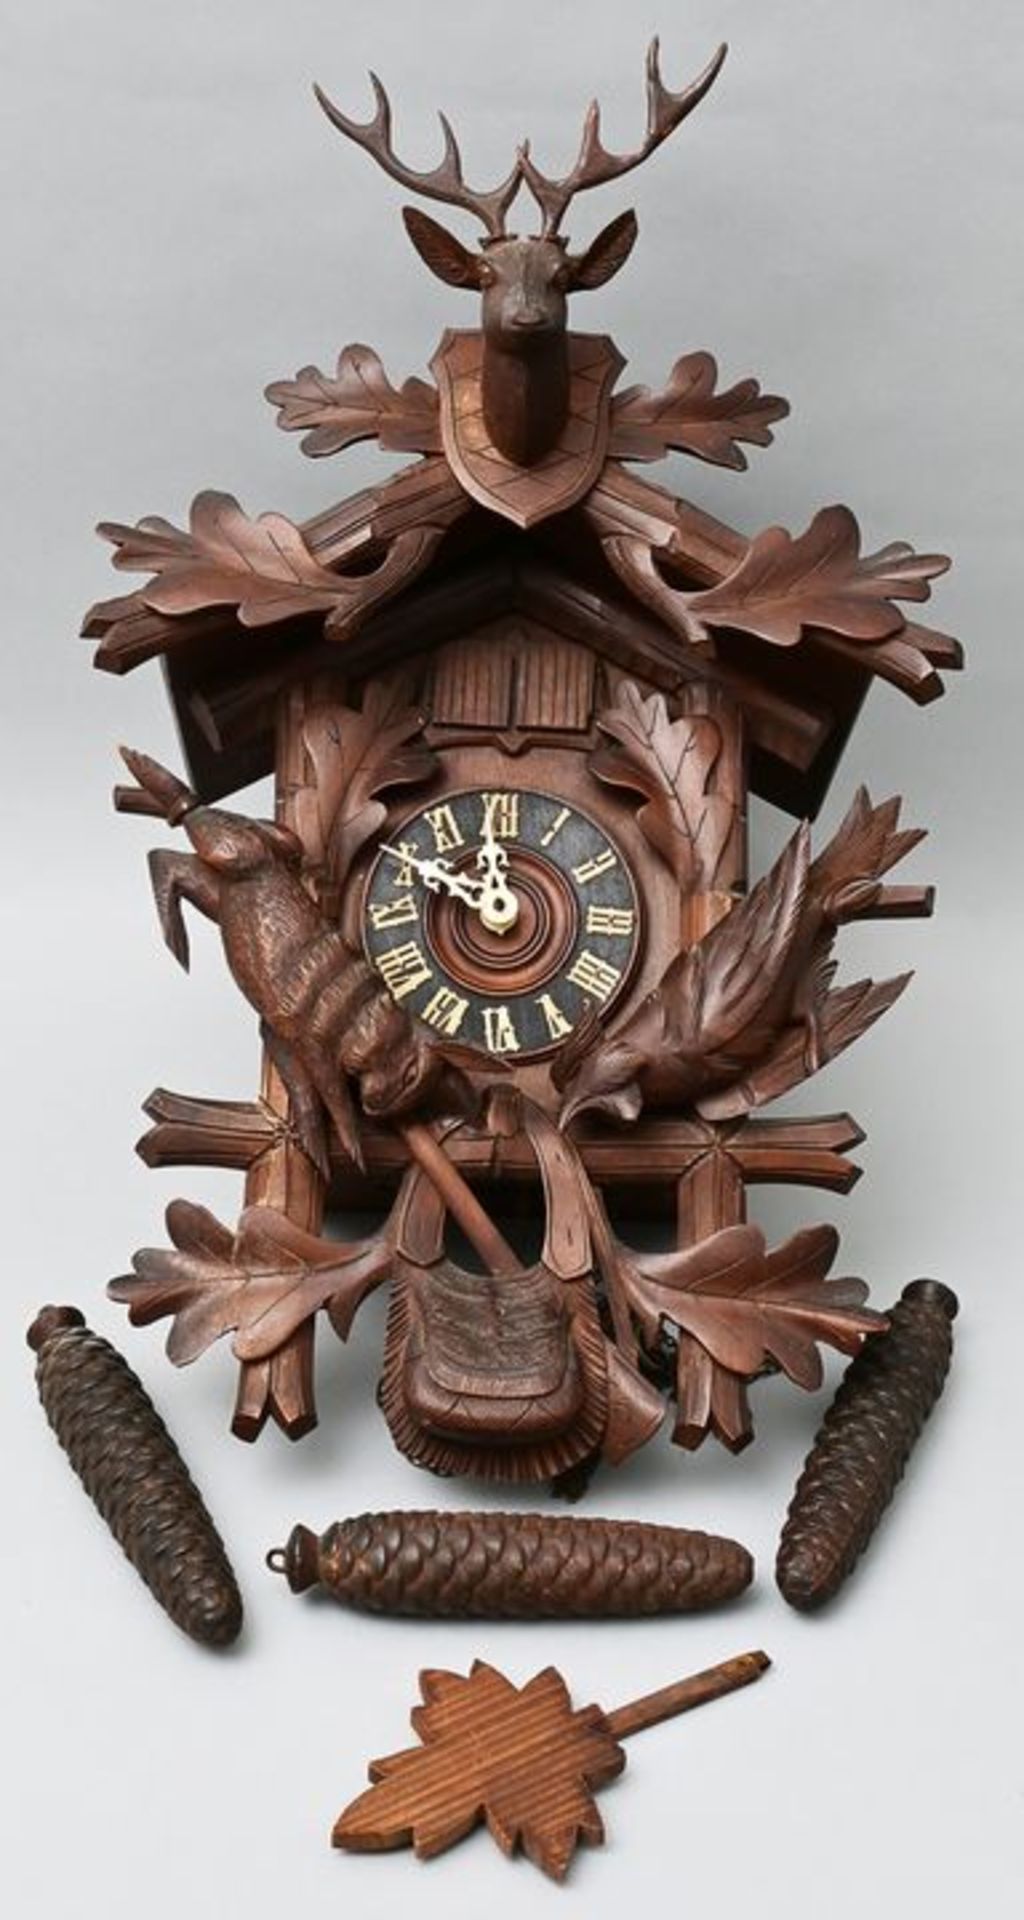 Kuckucksuhr/ cuckoo clock